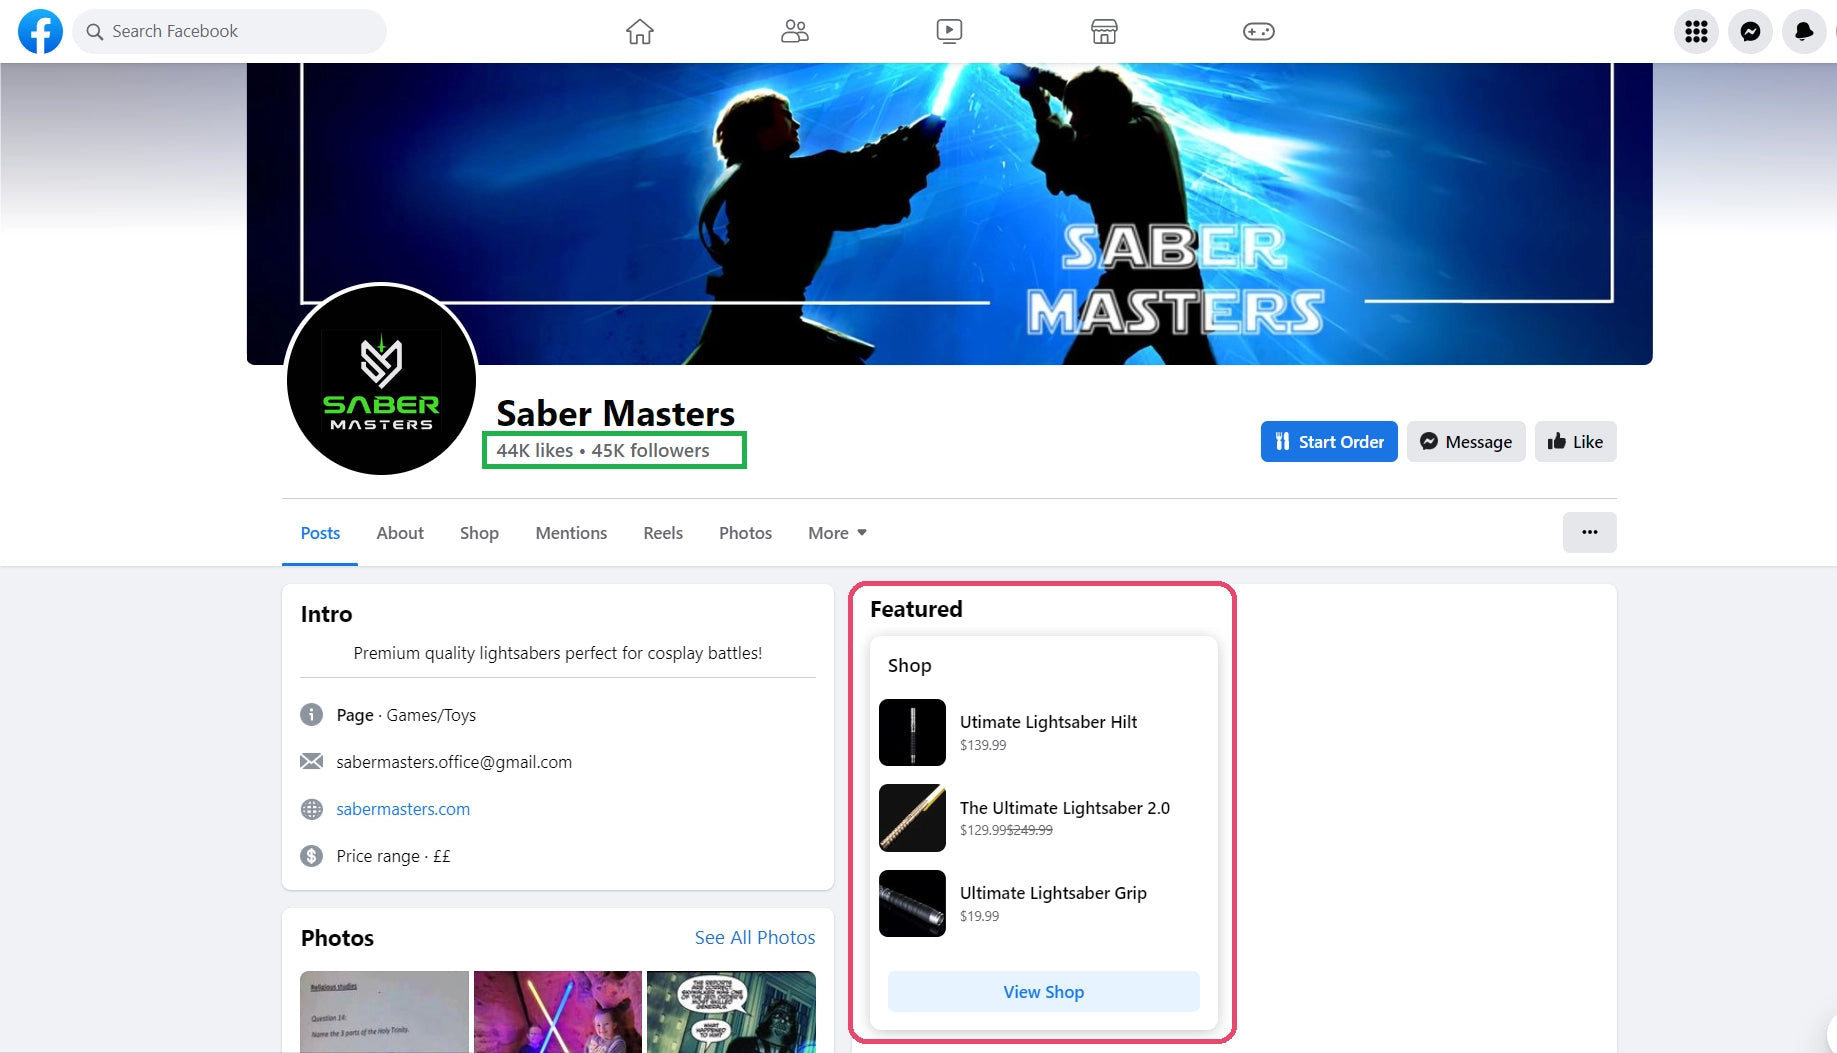 SaberMaster’s Facebook page